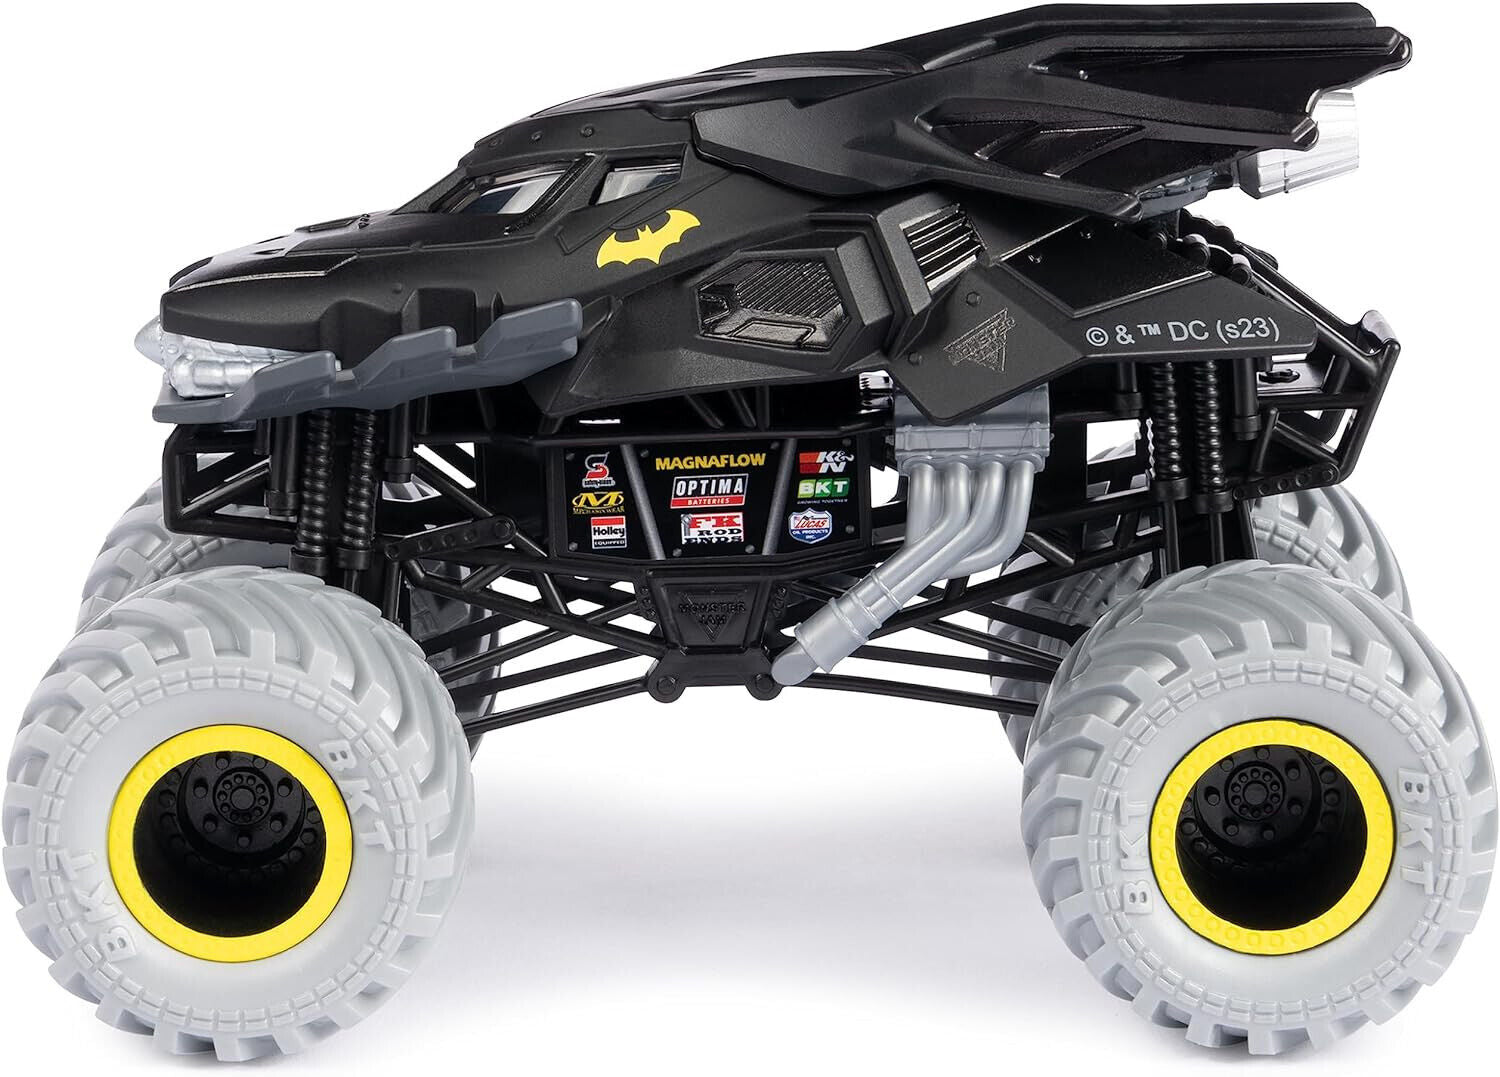 Monster Jam, Official Batman Monster Truck, Collector Die-Cast Vehicle